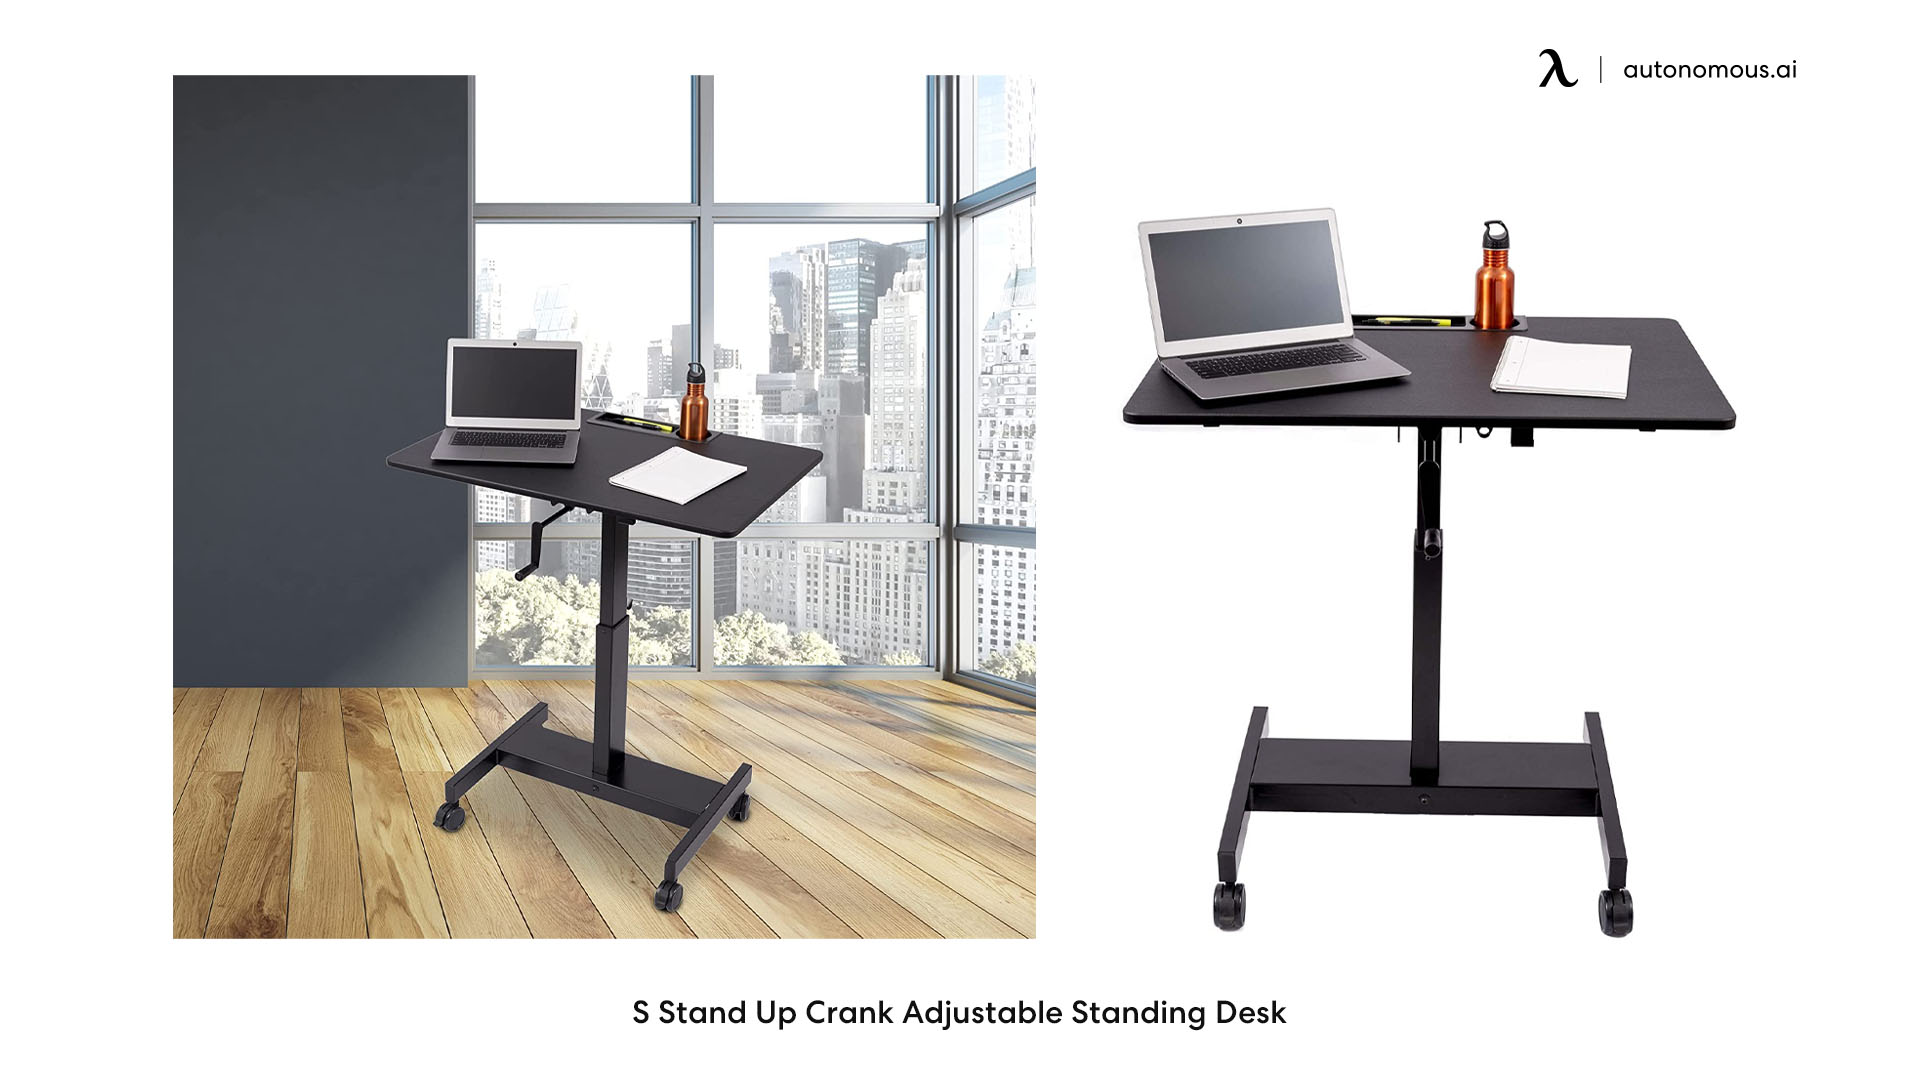 S Stand Up Crank Adjustable Standing Desk